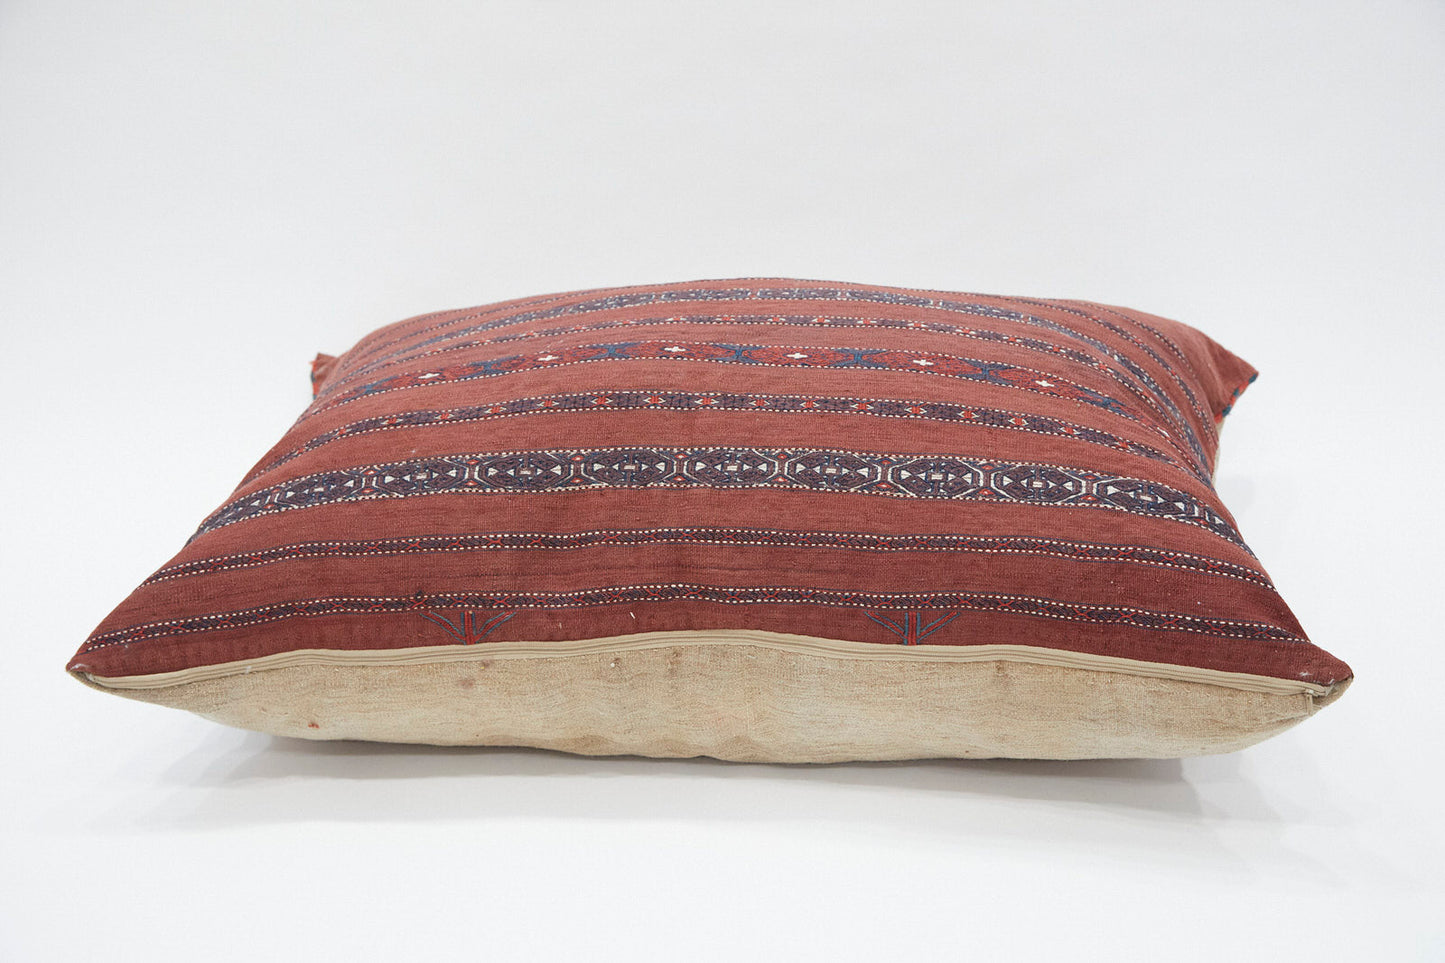 XL Antique Turkomon Bag Pillow